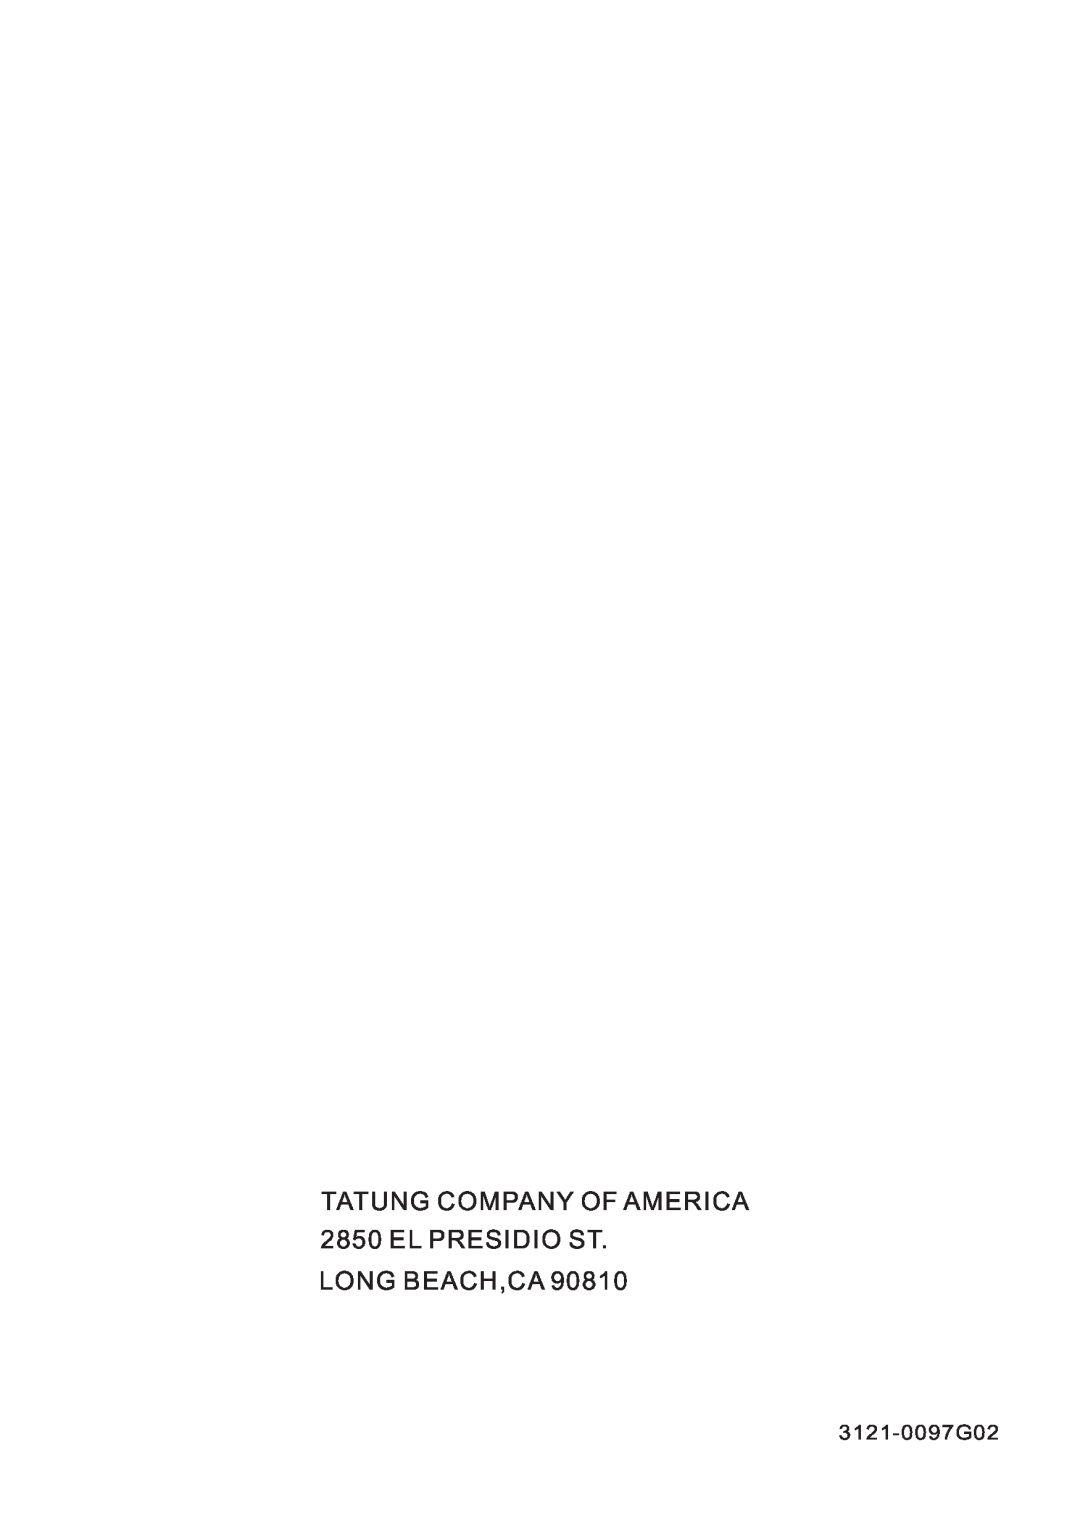 Tatung TBM-2003, TBM-1403, TBM-1503, TBM-0903 manual TATUNG COMPANY OF AMERICA 2850 EL PRESIDIO ST LONG BEACH,CA, 3121-0097G02 